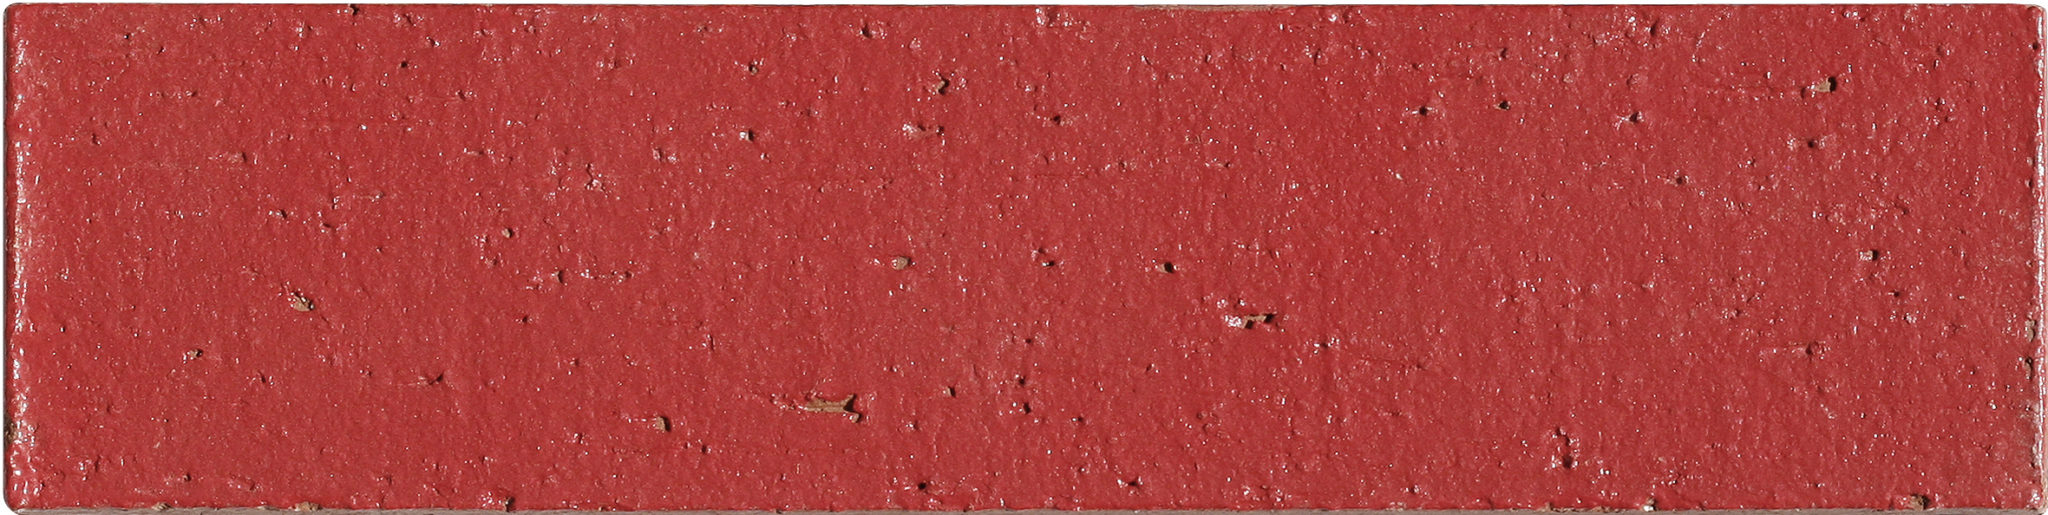 DJ - Morrocotto Red Subway Tile